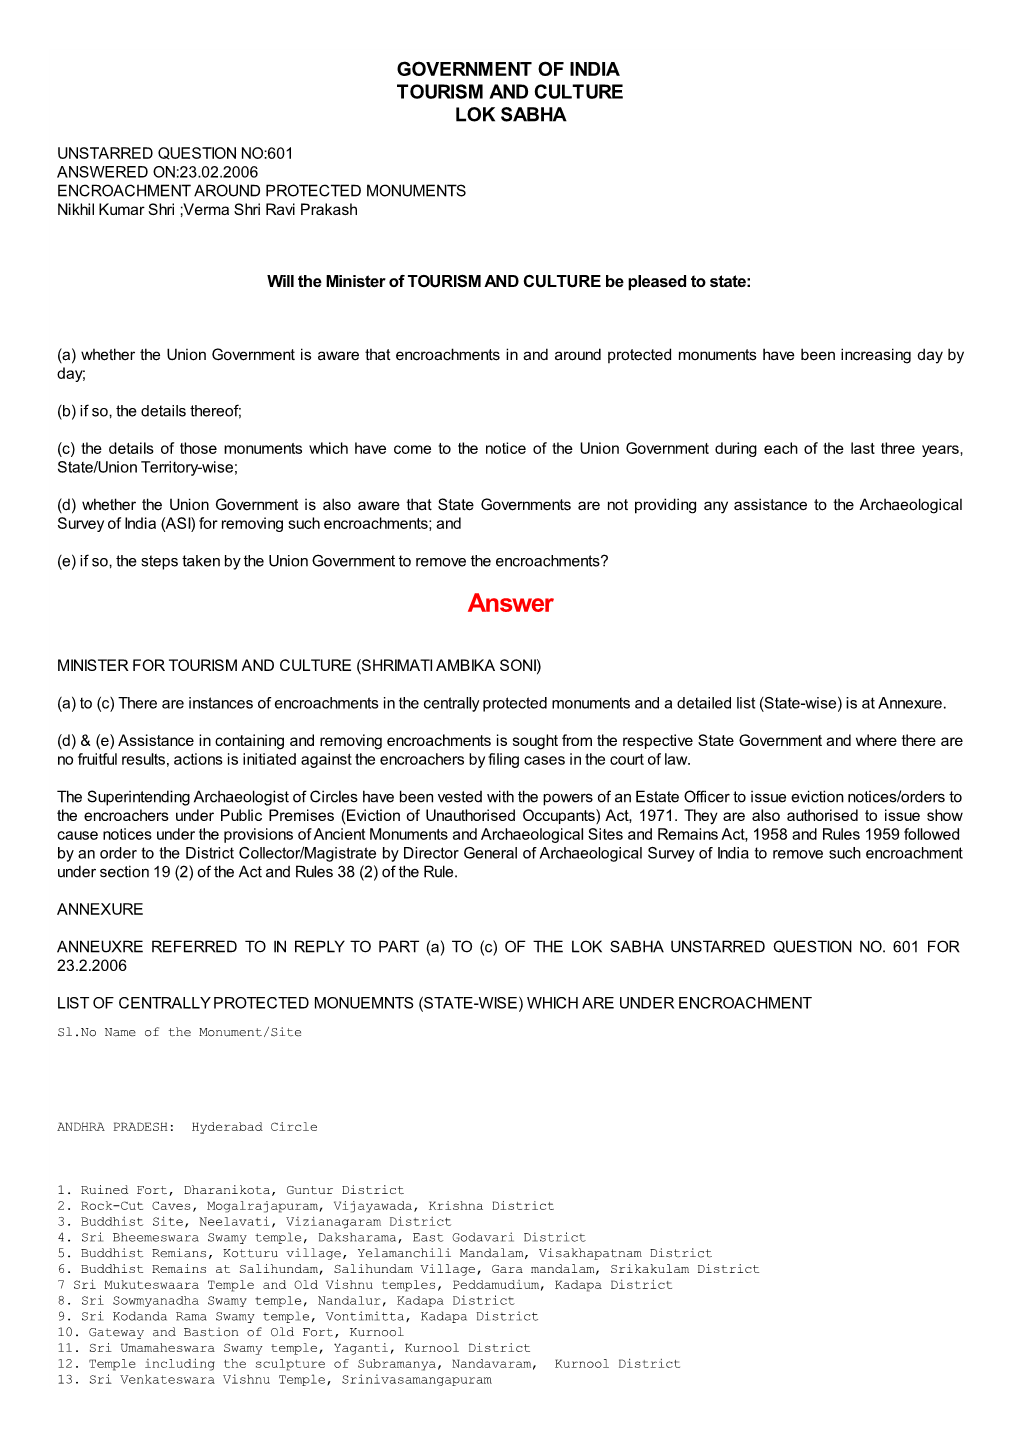 ANSWERED ON:23.02.2006 ENCROACHMENT AROUND PROTECTED MONUMENTS Nikhil Kumar Shri ;Verma Shri Ravi Prakash